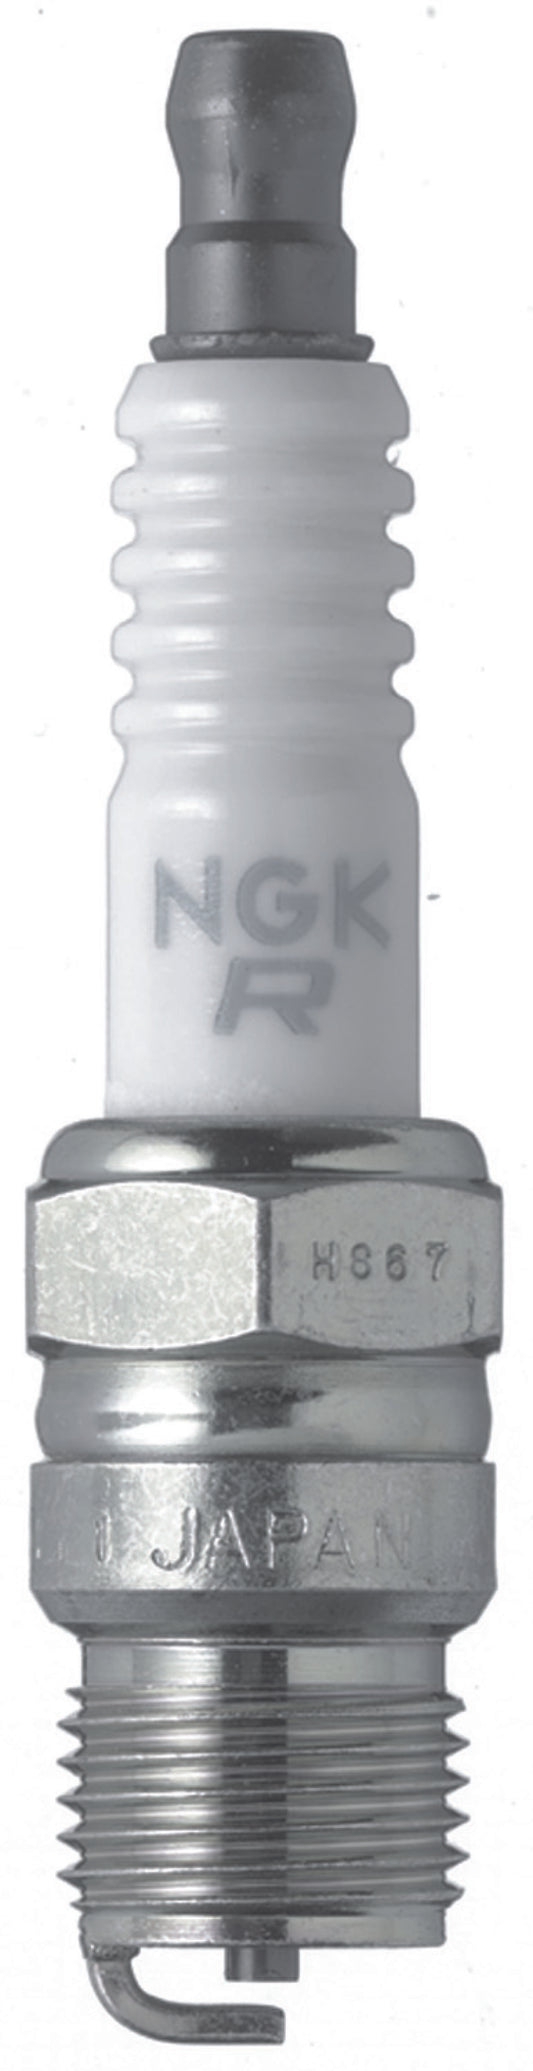 NGK V-Power Spark Plug Box of 4 (YR55)